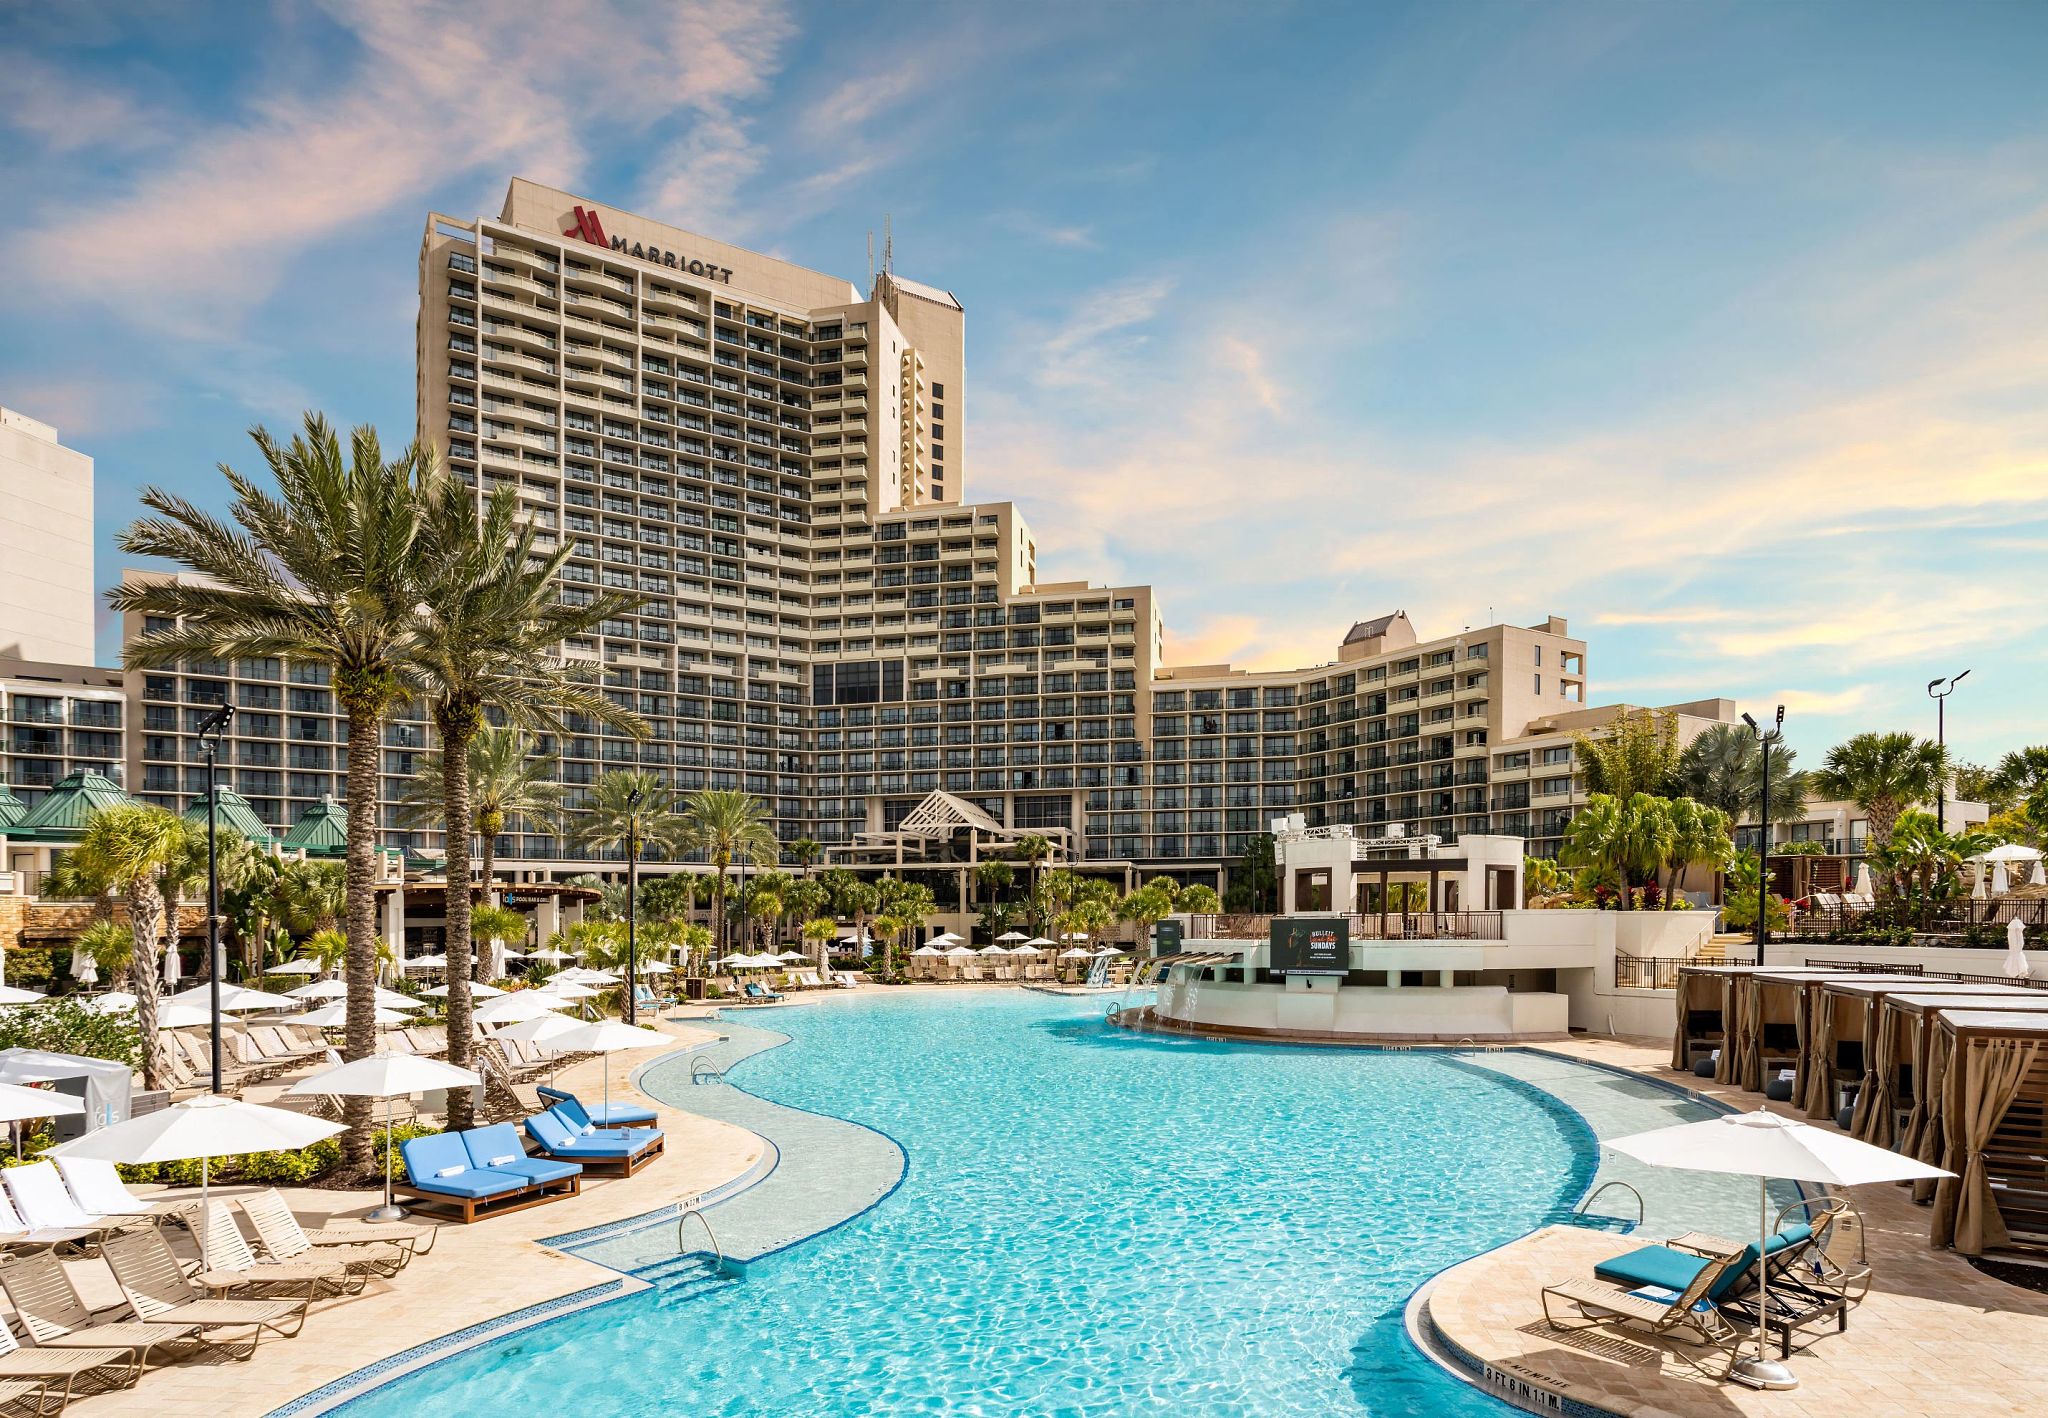 High Velocity – Orlando World Center Marriott Restaurant - Orlando, FL